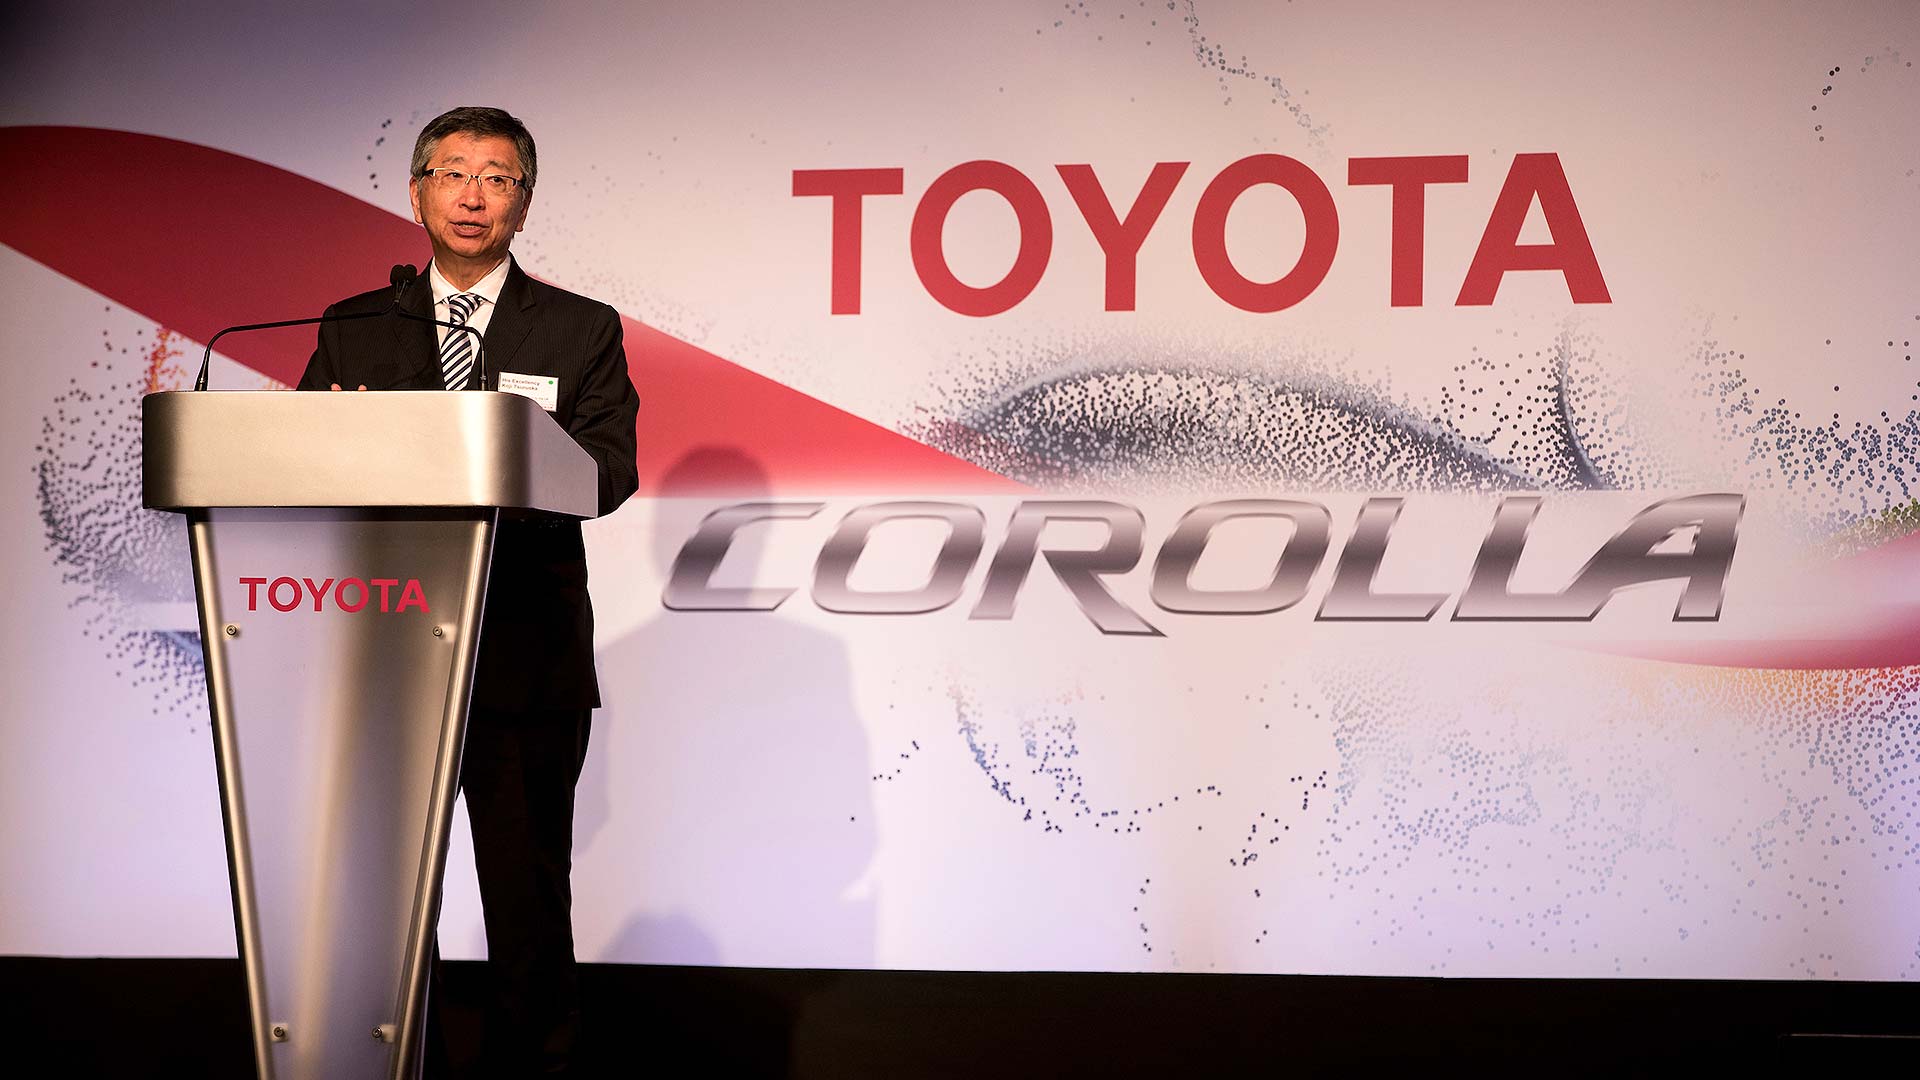 New 2019 Toyota Corolla start of production ceremony